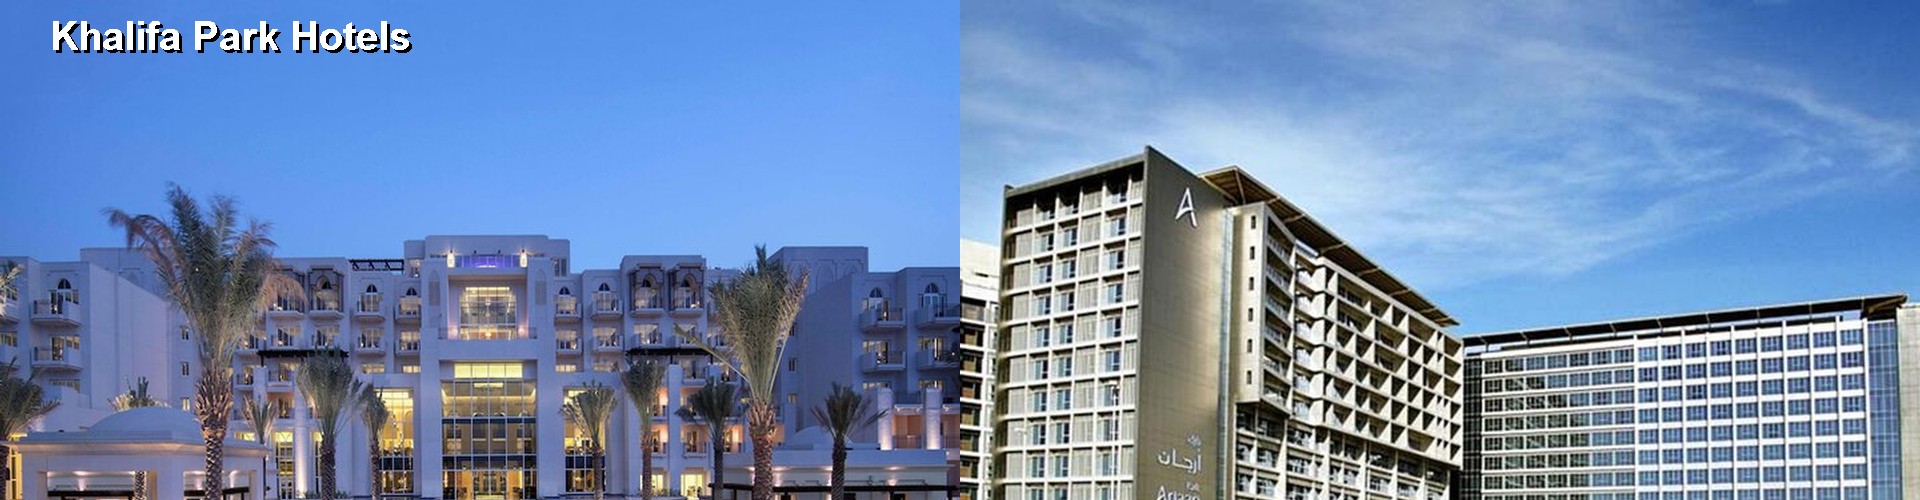 5 Best Hotels near Khalifa Park